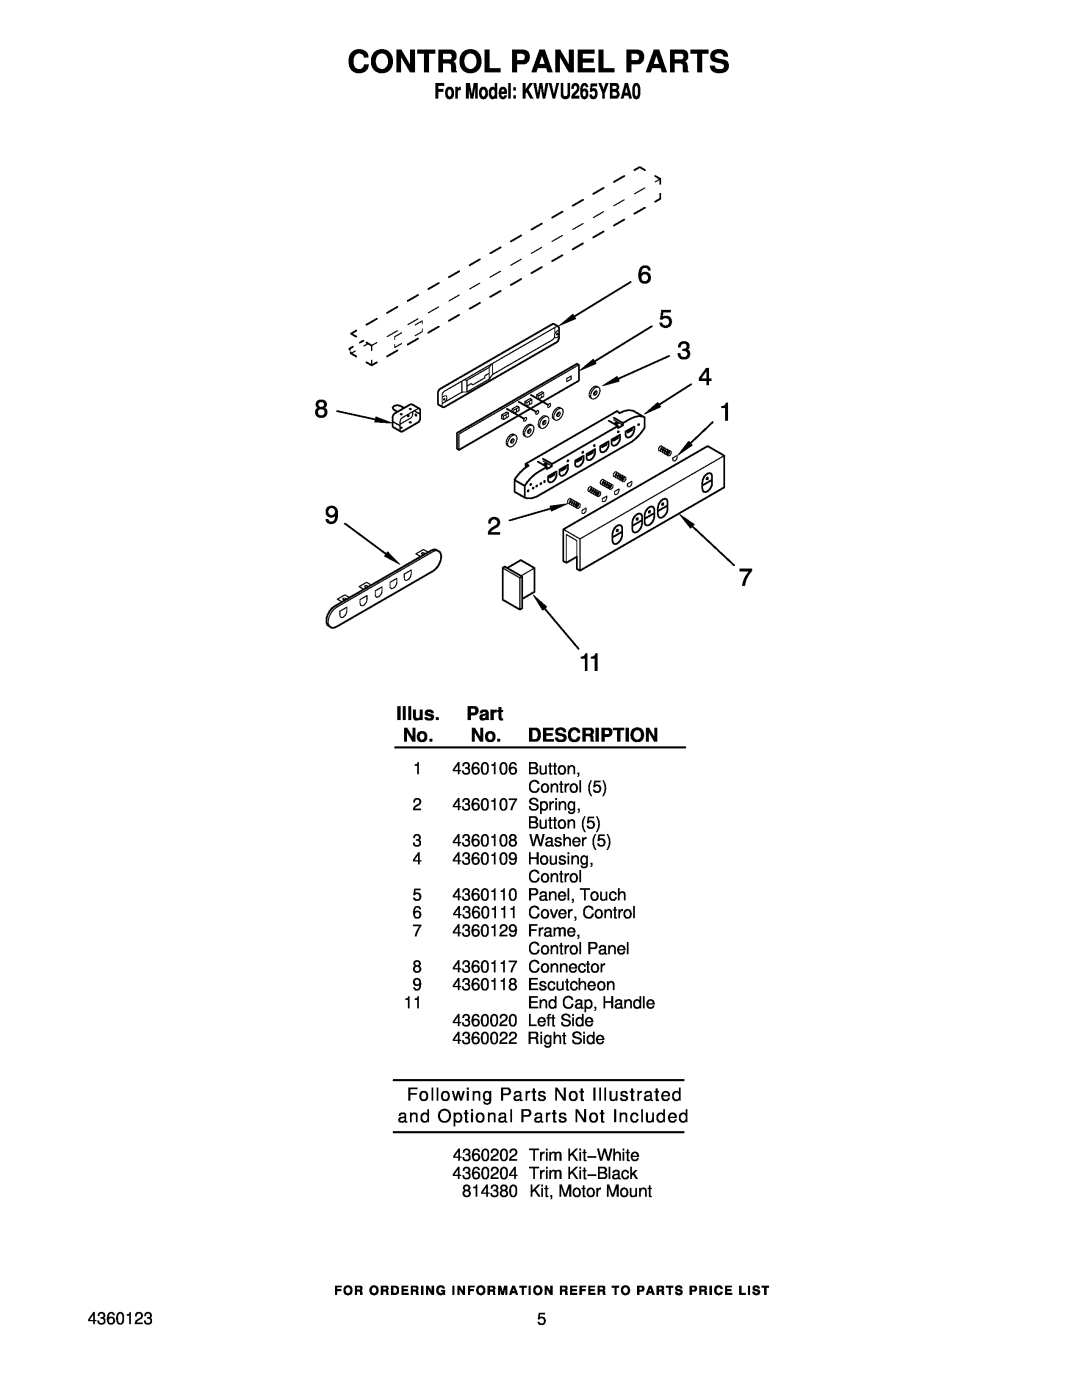 KitchenAid manual Control Panel Parts, For Model KWVU265YBA0, Illus. Part No. No. DESCRIPTION 